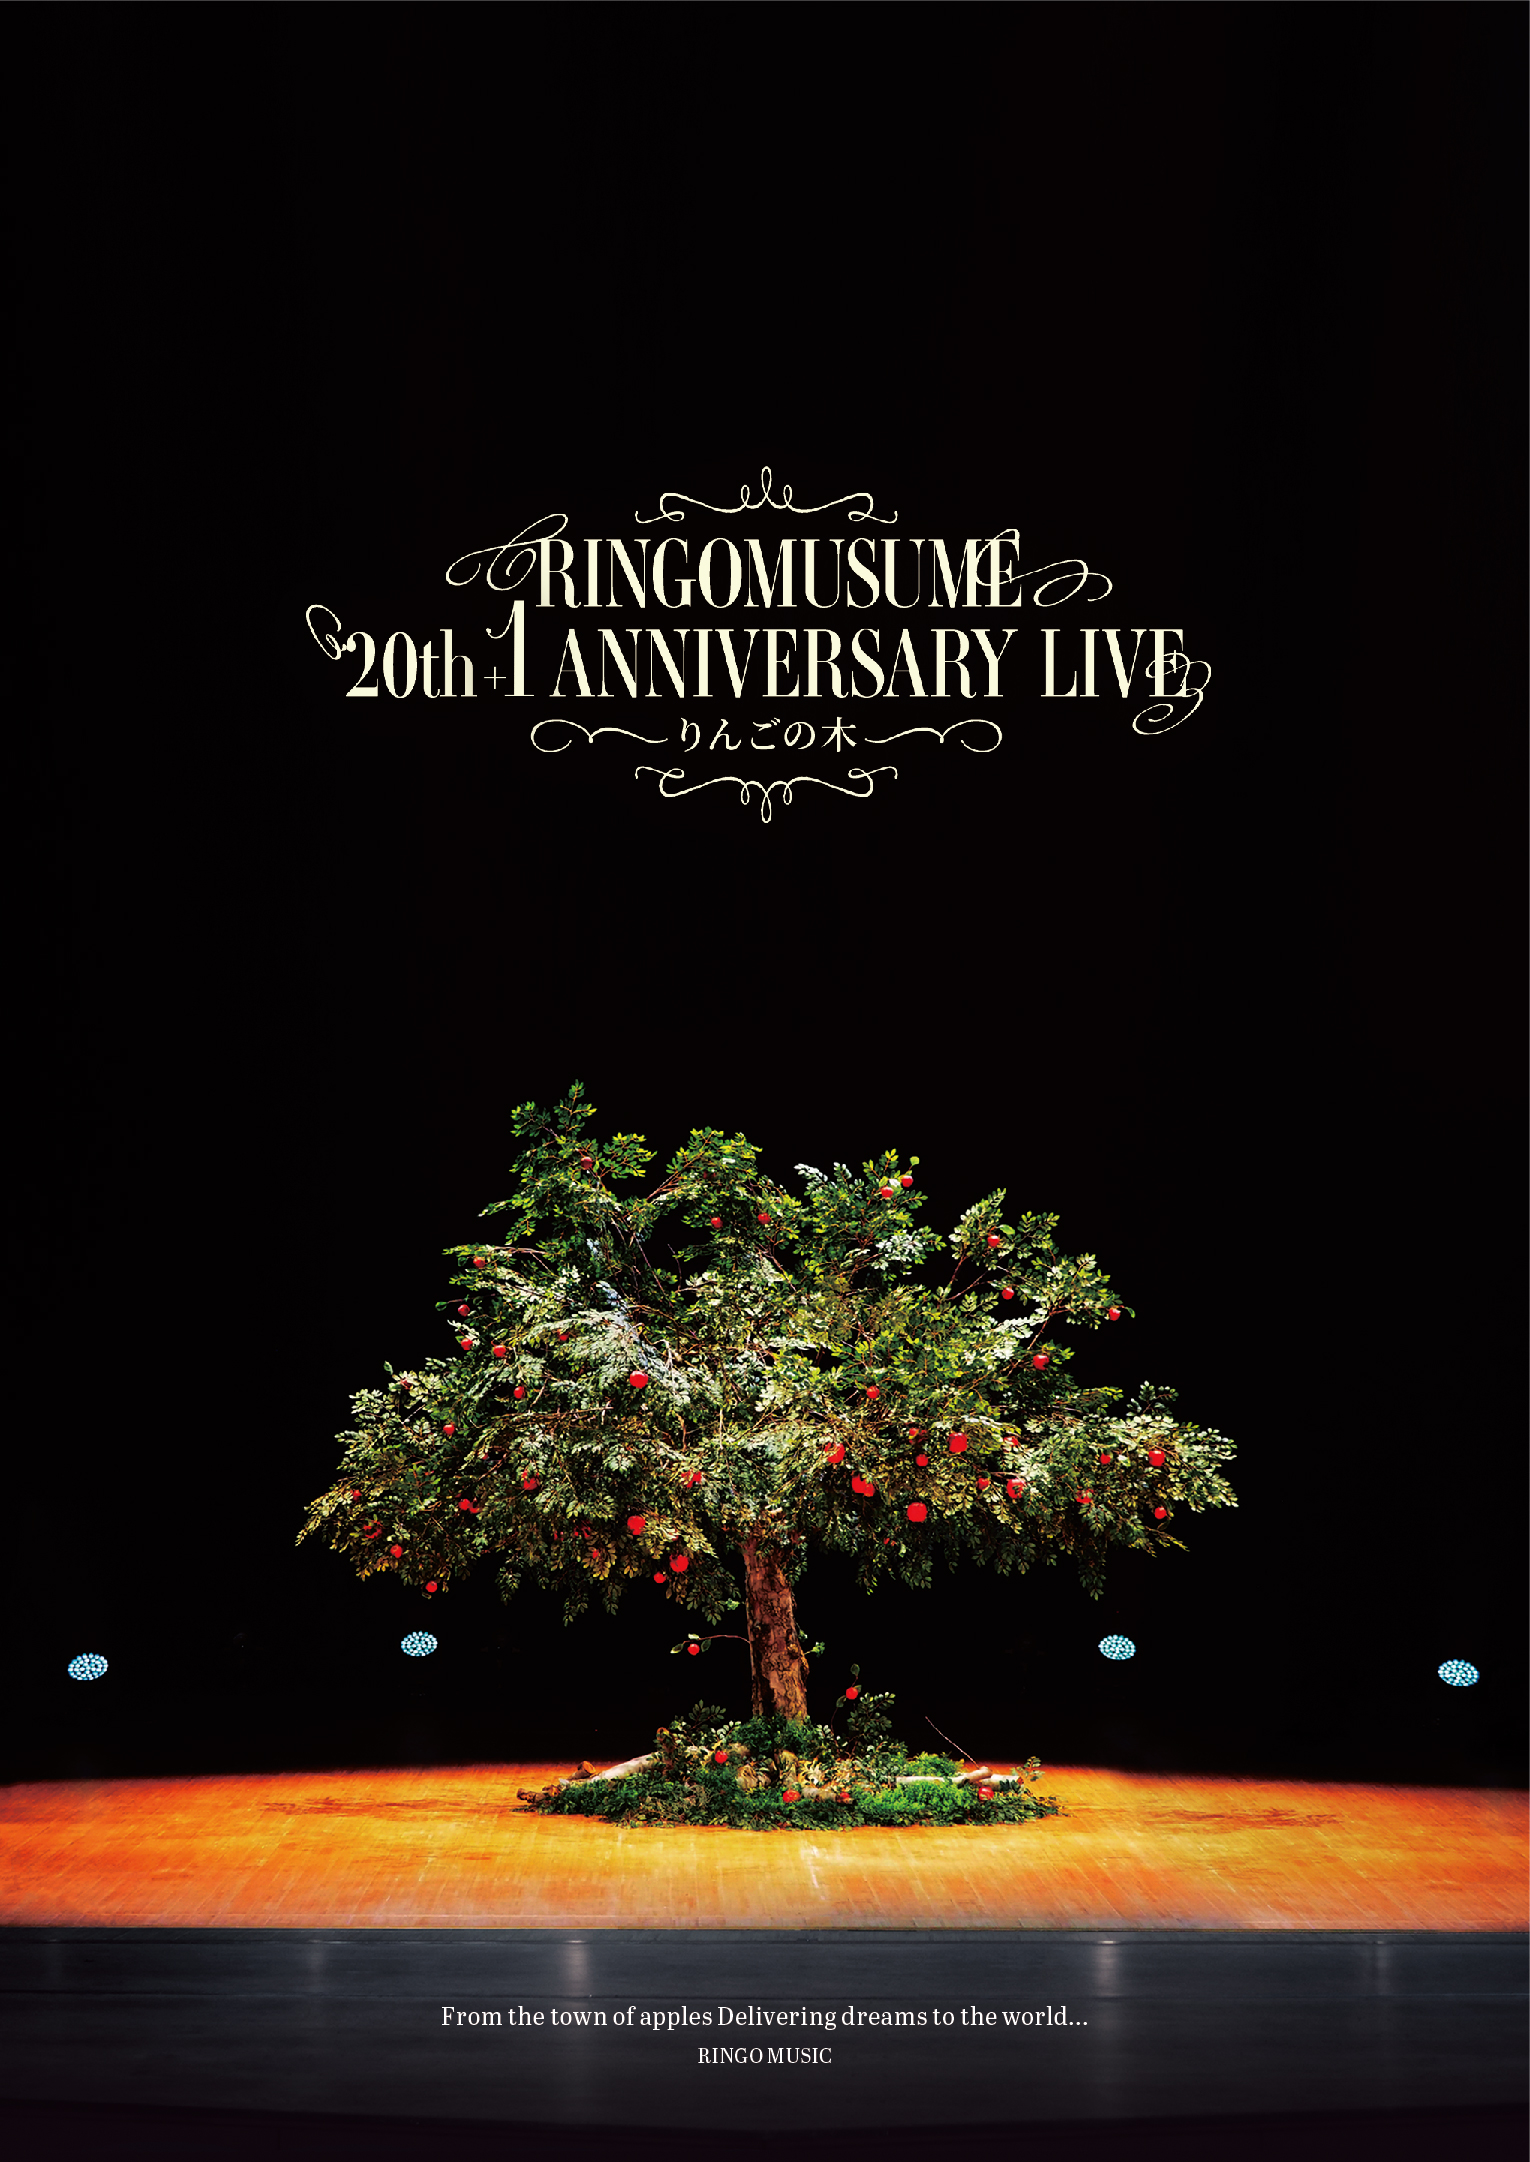 RINGOMUSUME 20th+1 ANNIVERSARY LIVE 〜りんごの木〜